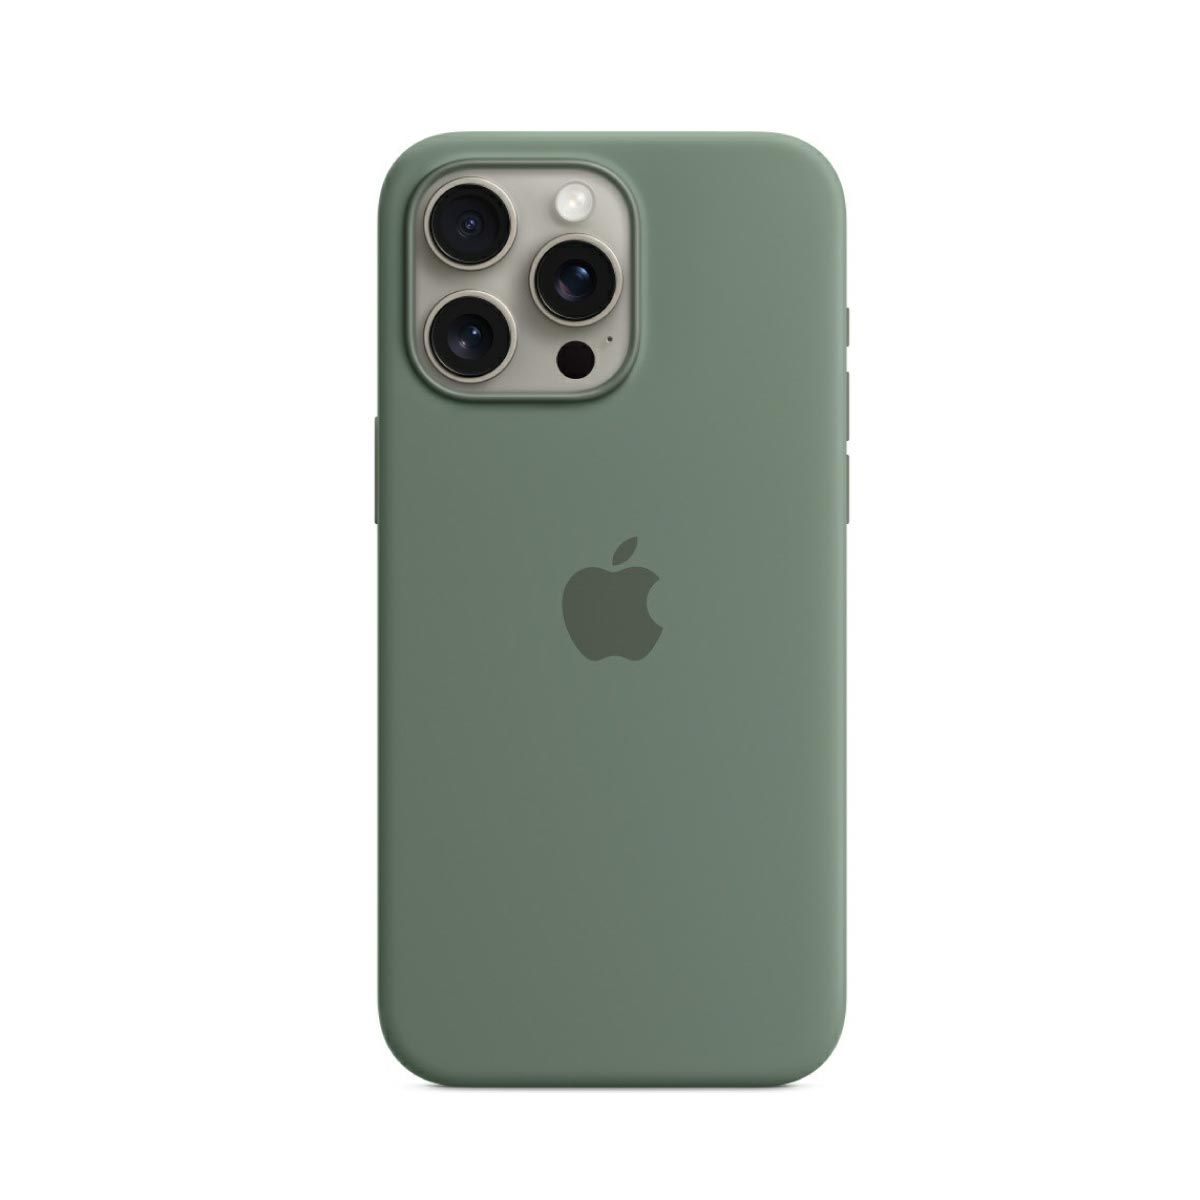 Apple Case เคสซิลิโคนสำหรับ iPhone 15 Pro Max พร้อม MagSafe -สีเขียวไซเปรส